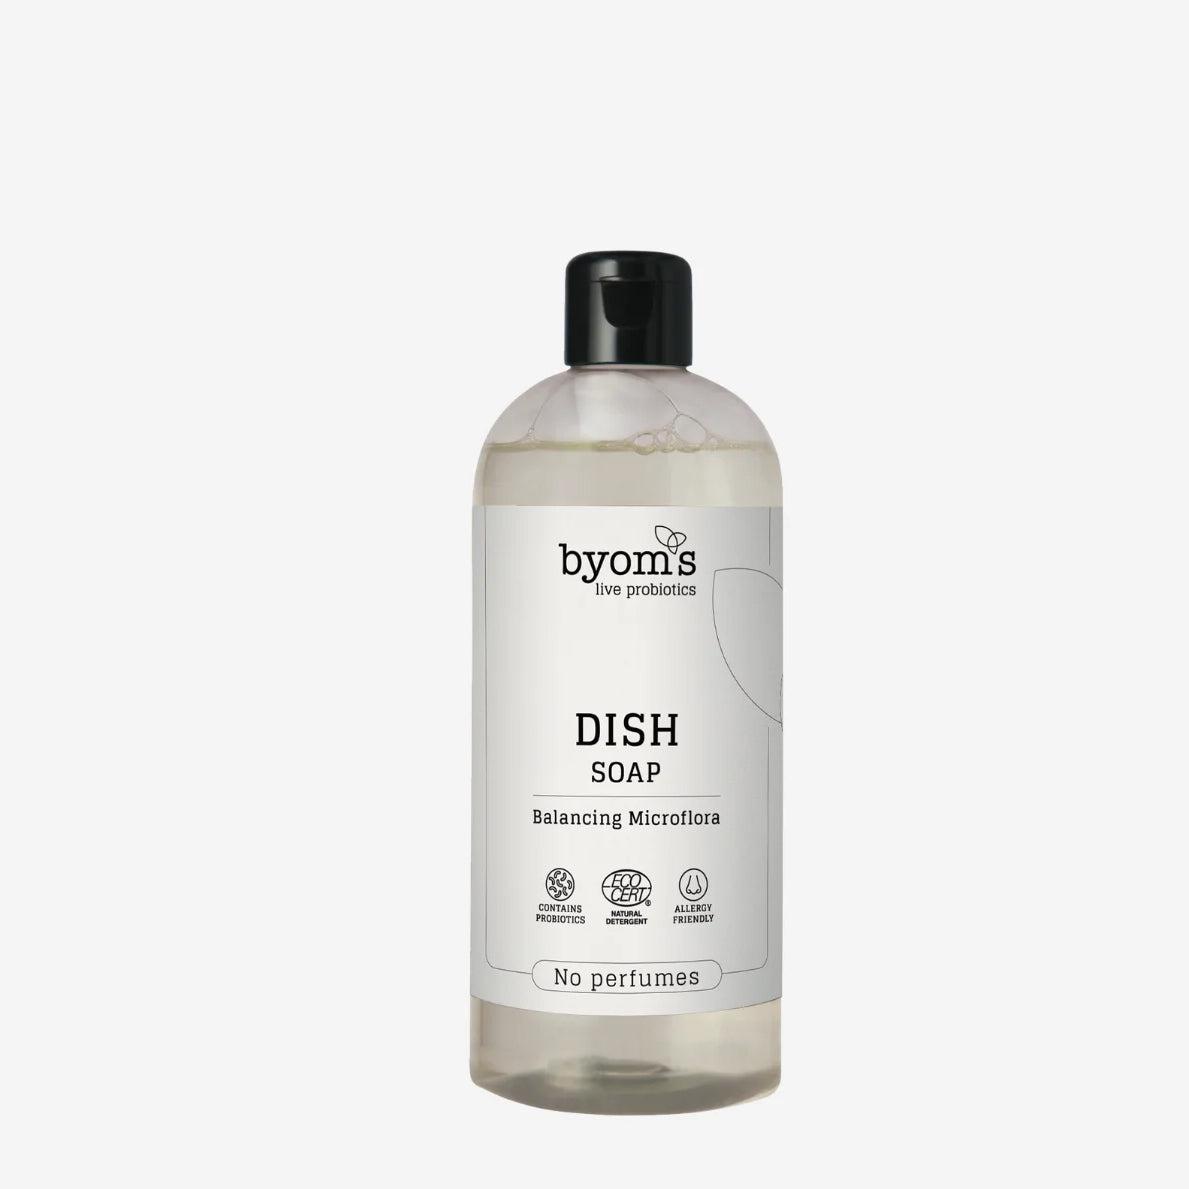 Billede af Probiotic Dish Soap, No Perfumes, 400 ml.